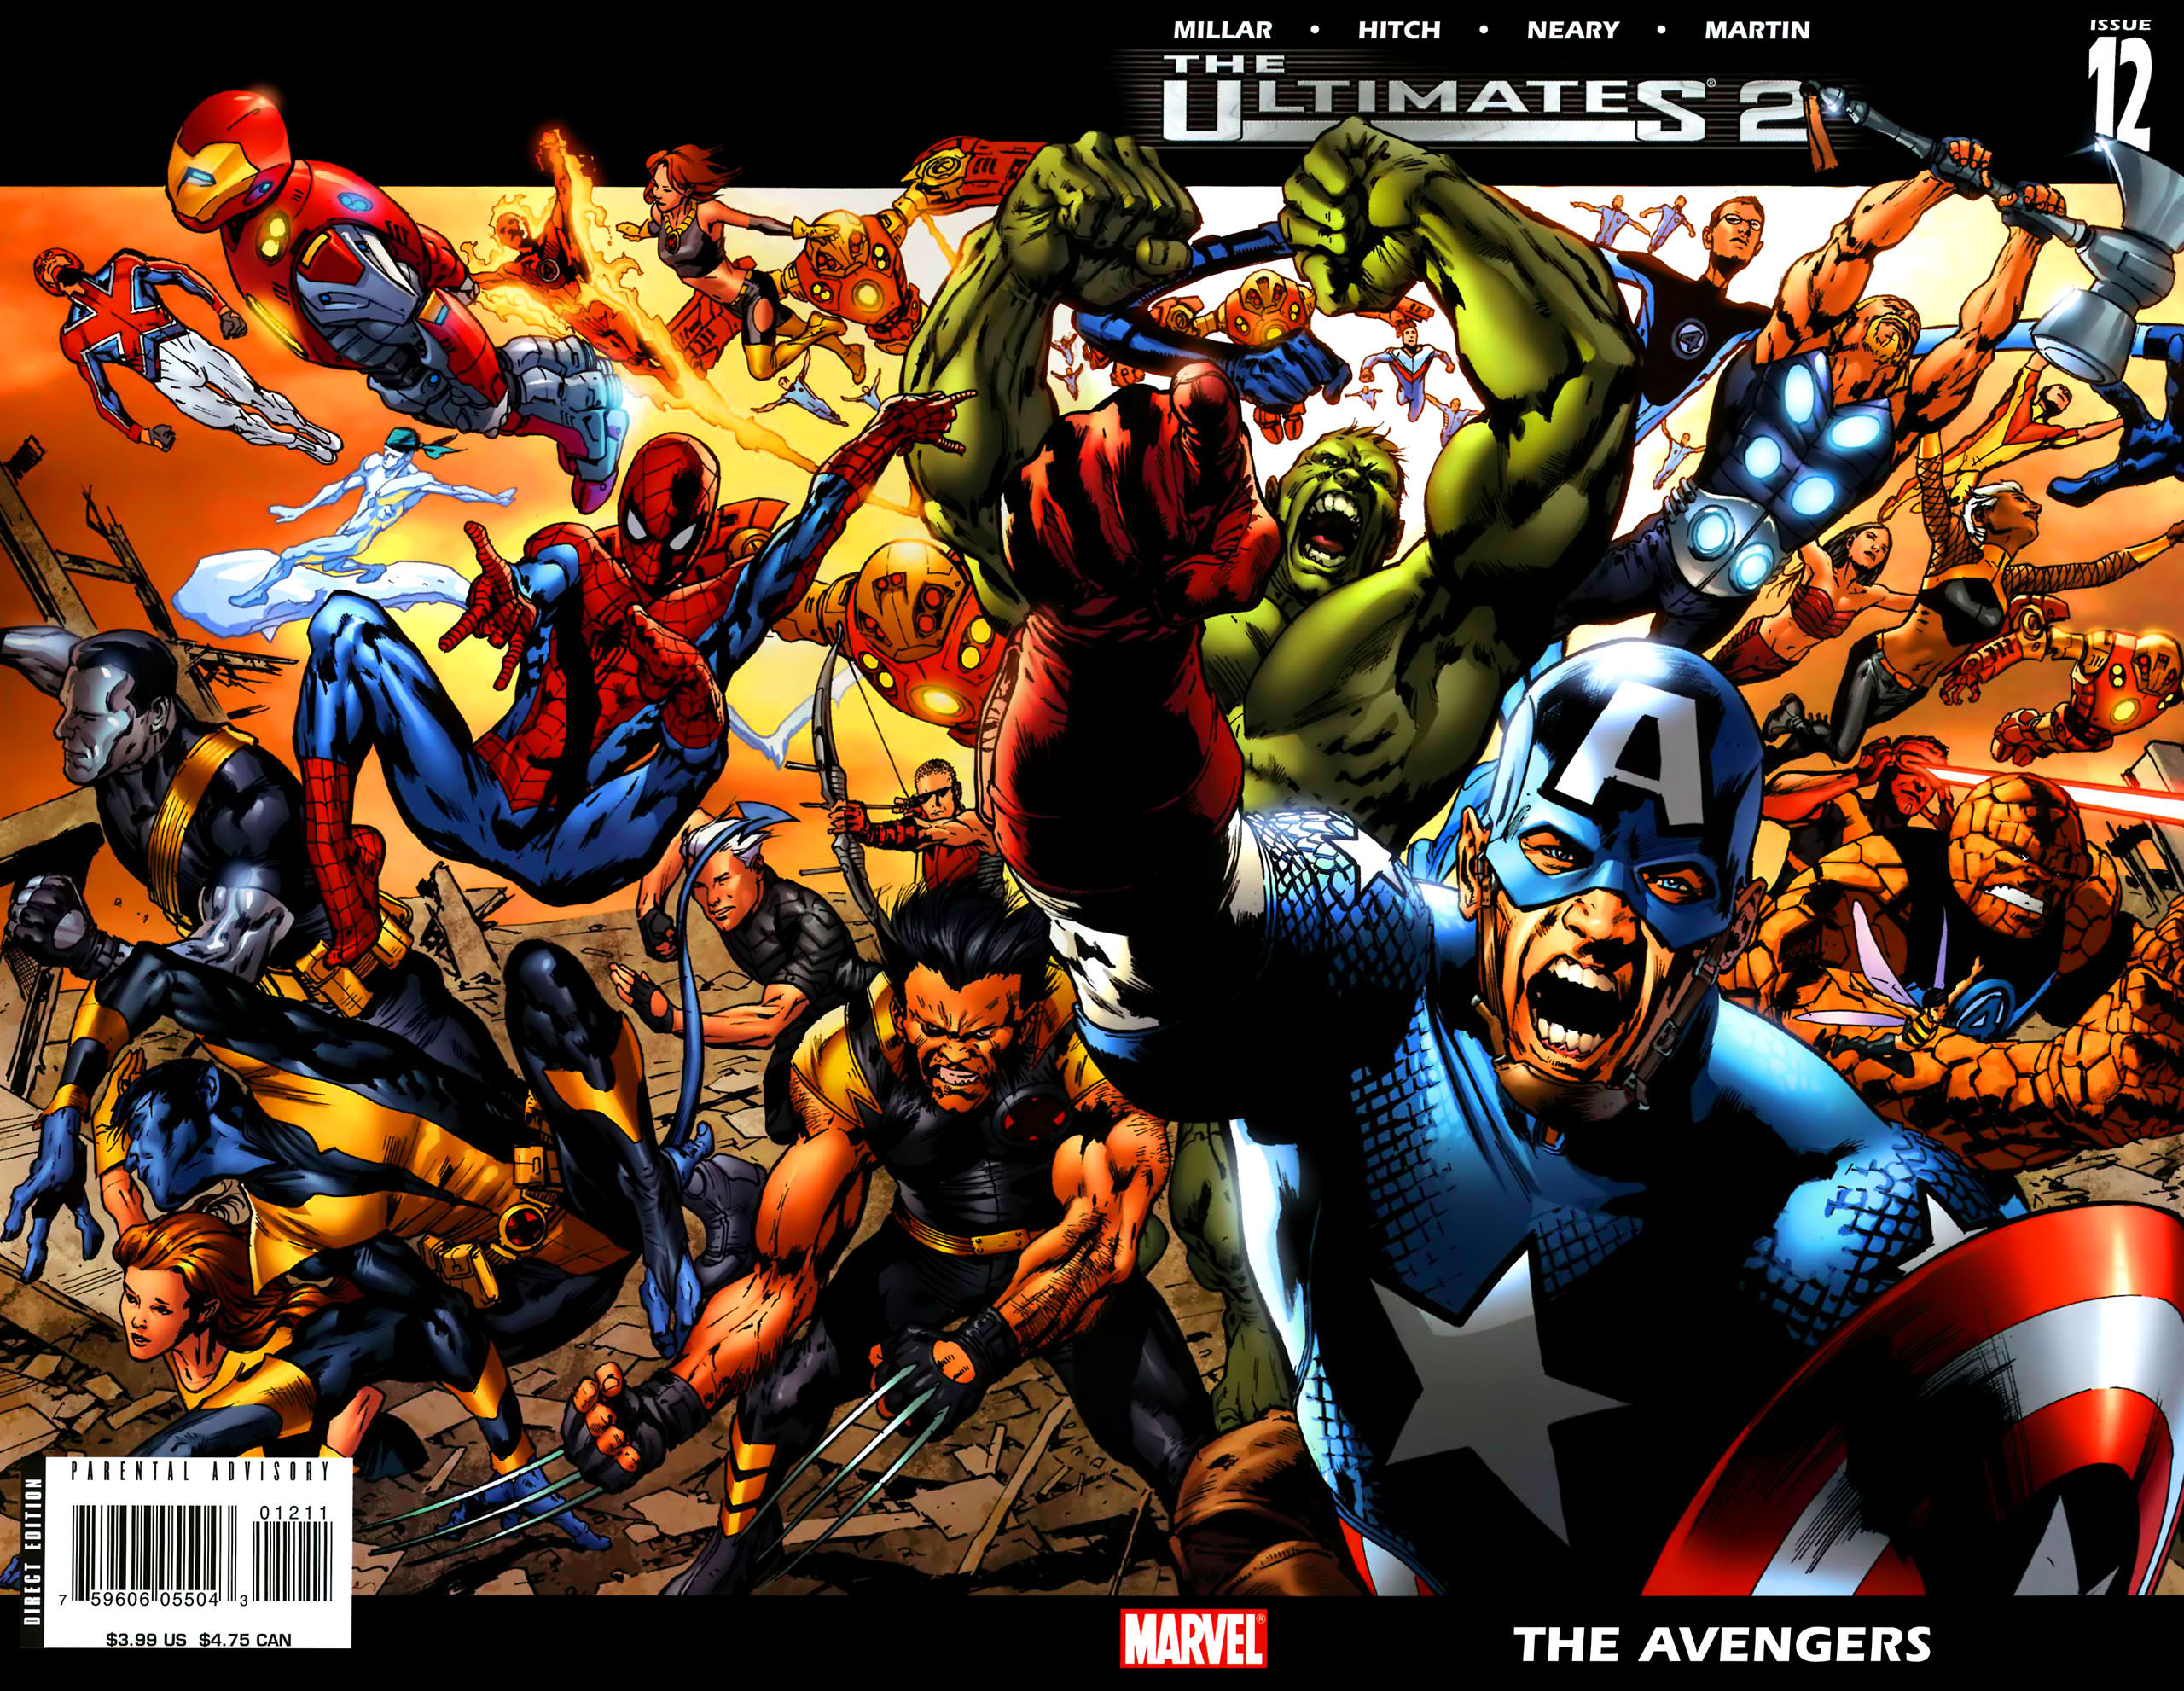 comics, ultimates 2, captain america, colossus, cyclops (marvel comics), earth 1610, hawkeye, hulk, human torch (marvel comics), iceman (marvel comics), iron man, jean grey, nightcrawler (marvel comics), quicksilver (marvel comics), scarlet witch, spider man, storm (marvel comics), thing (marvel comics), thor, ultimates (marvel comics), wasp (marvel comics), wolverine